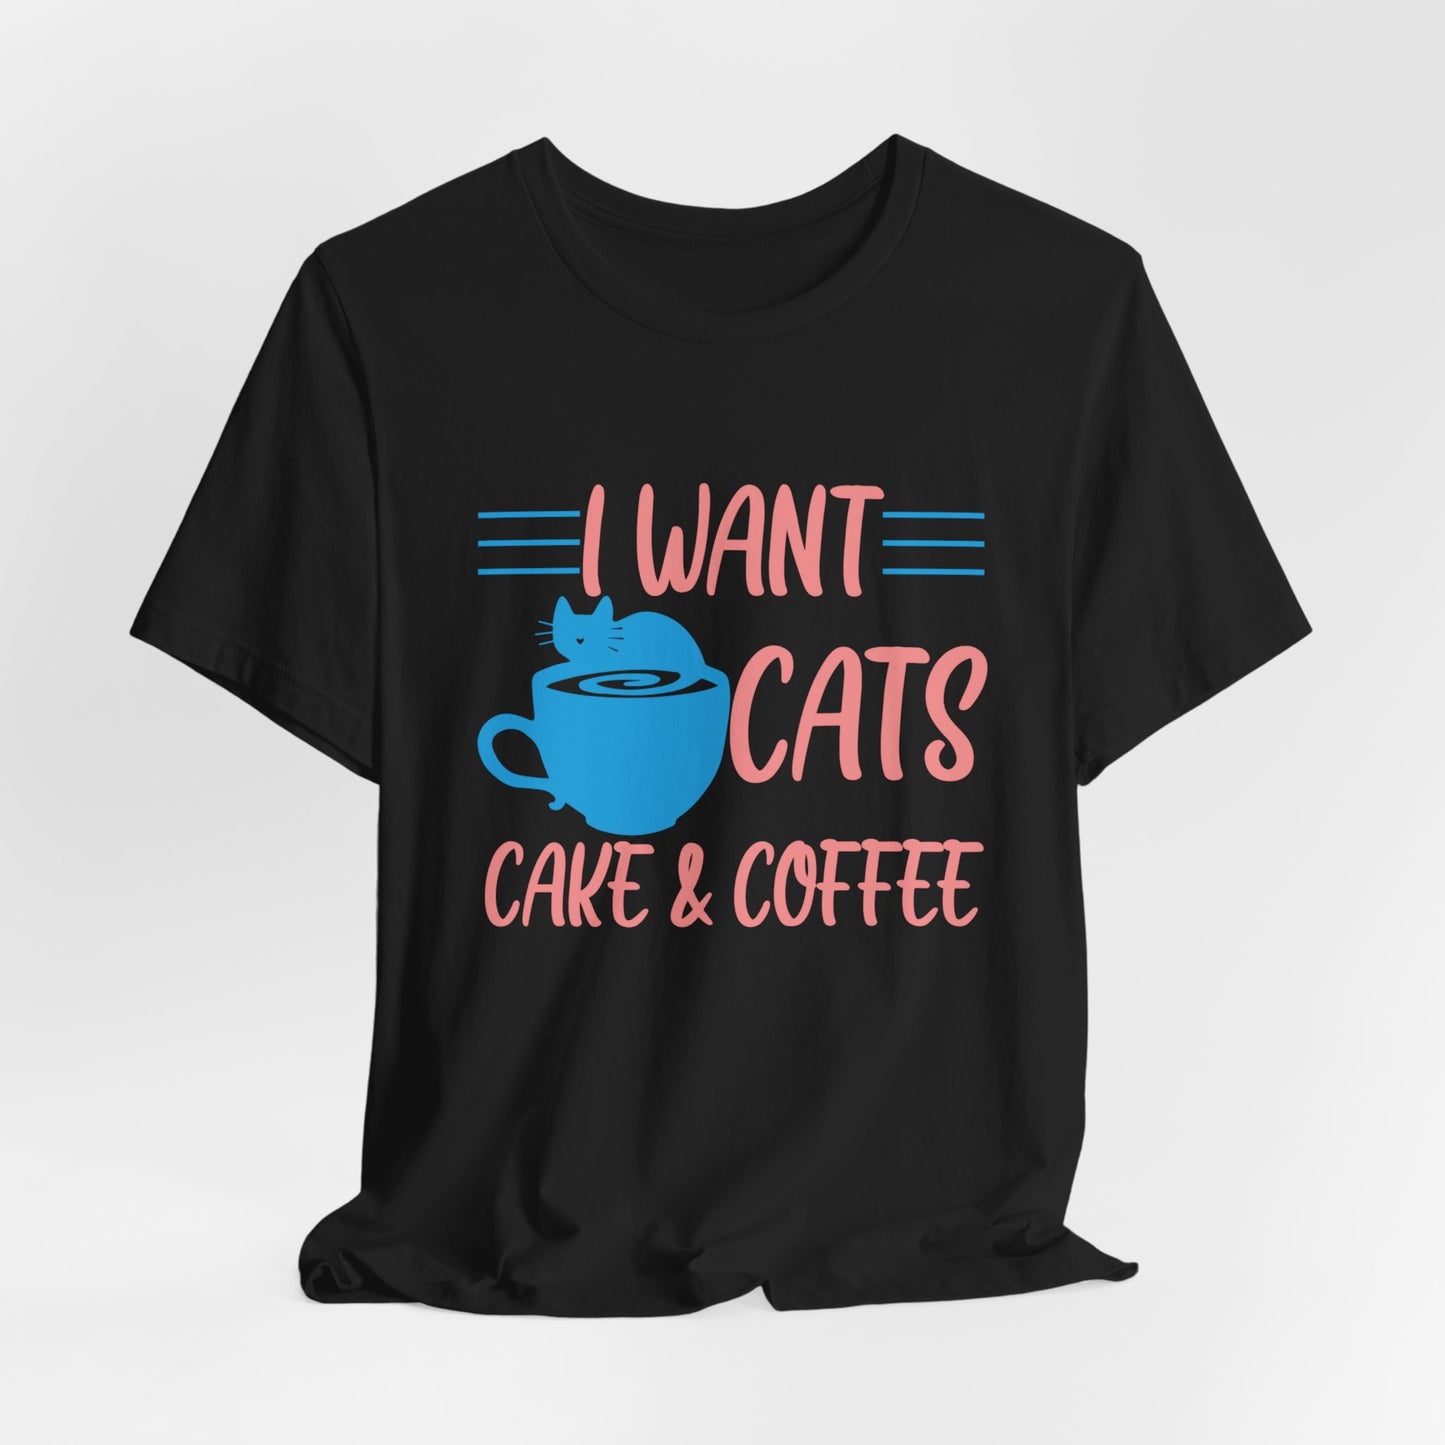 Cats Cake & Coffee T-Shirt